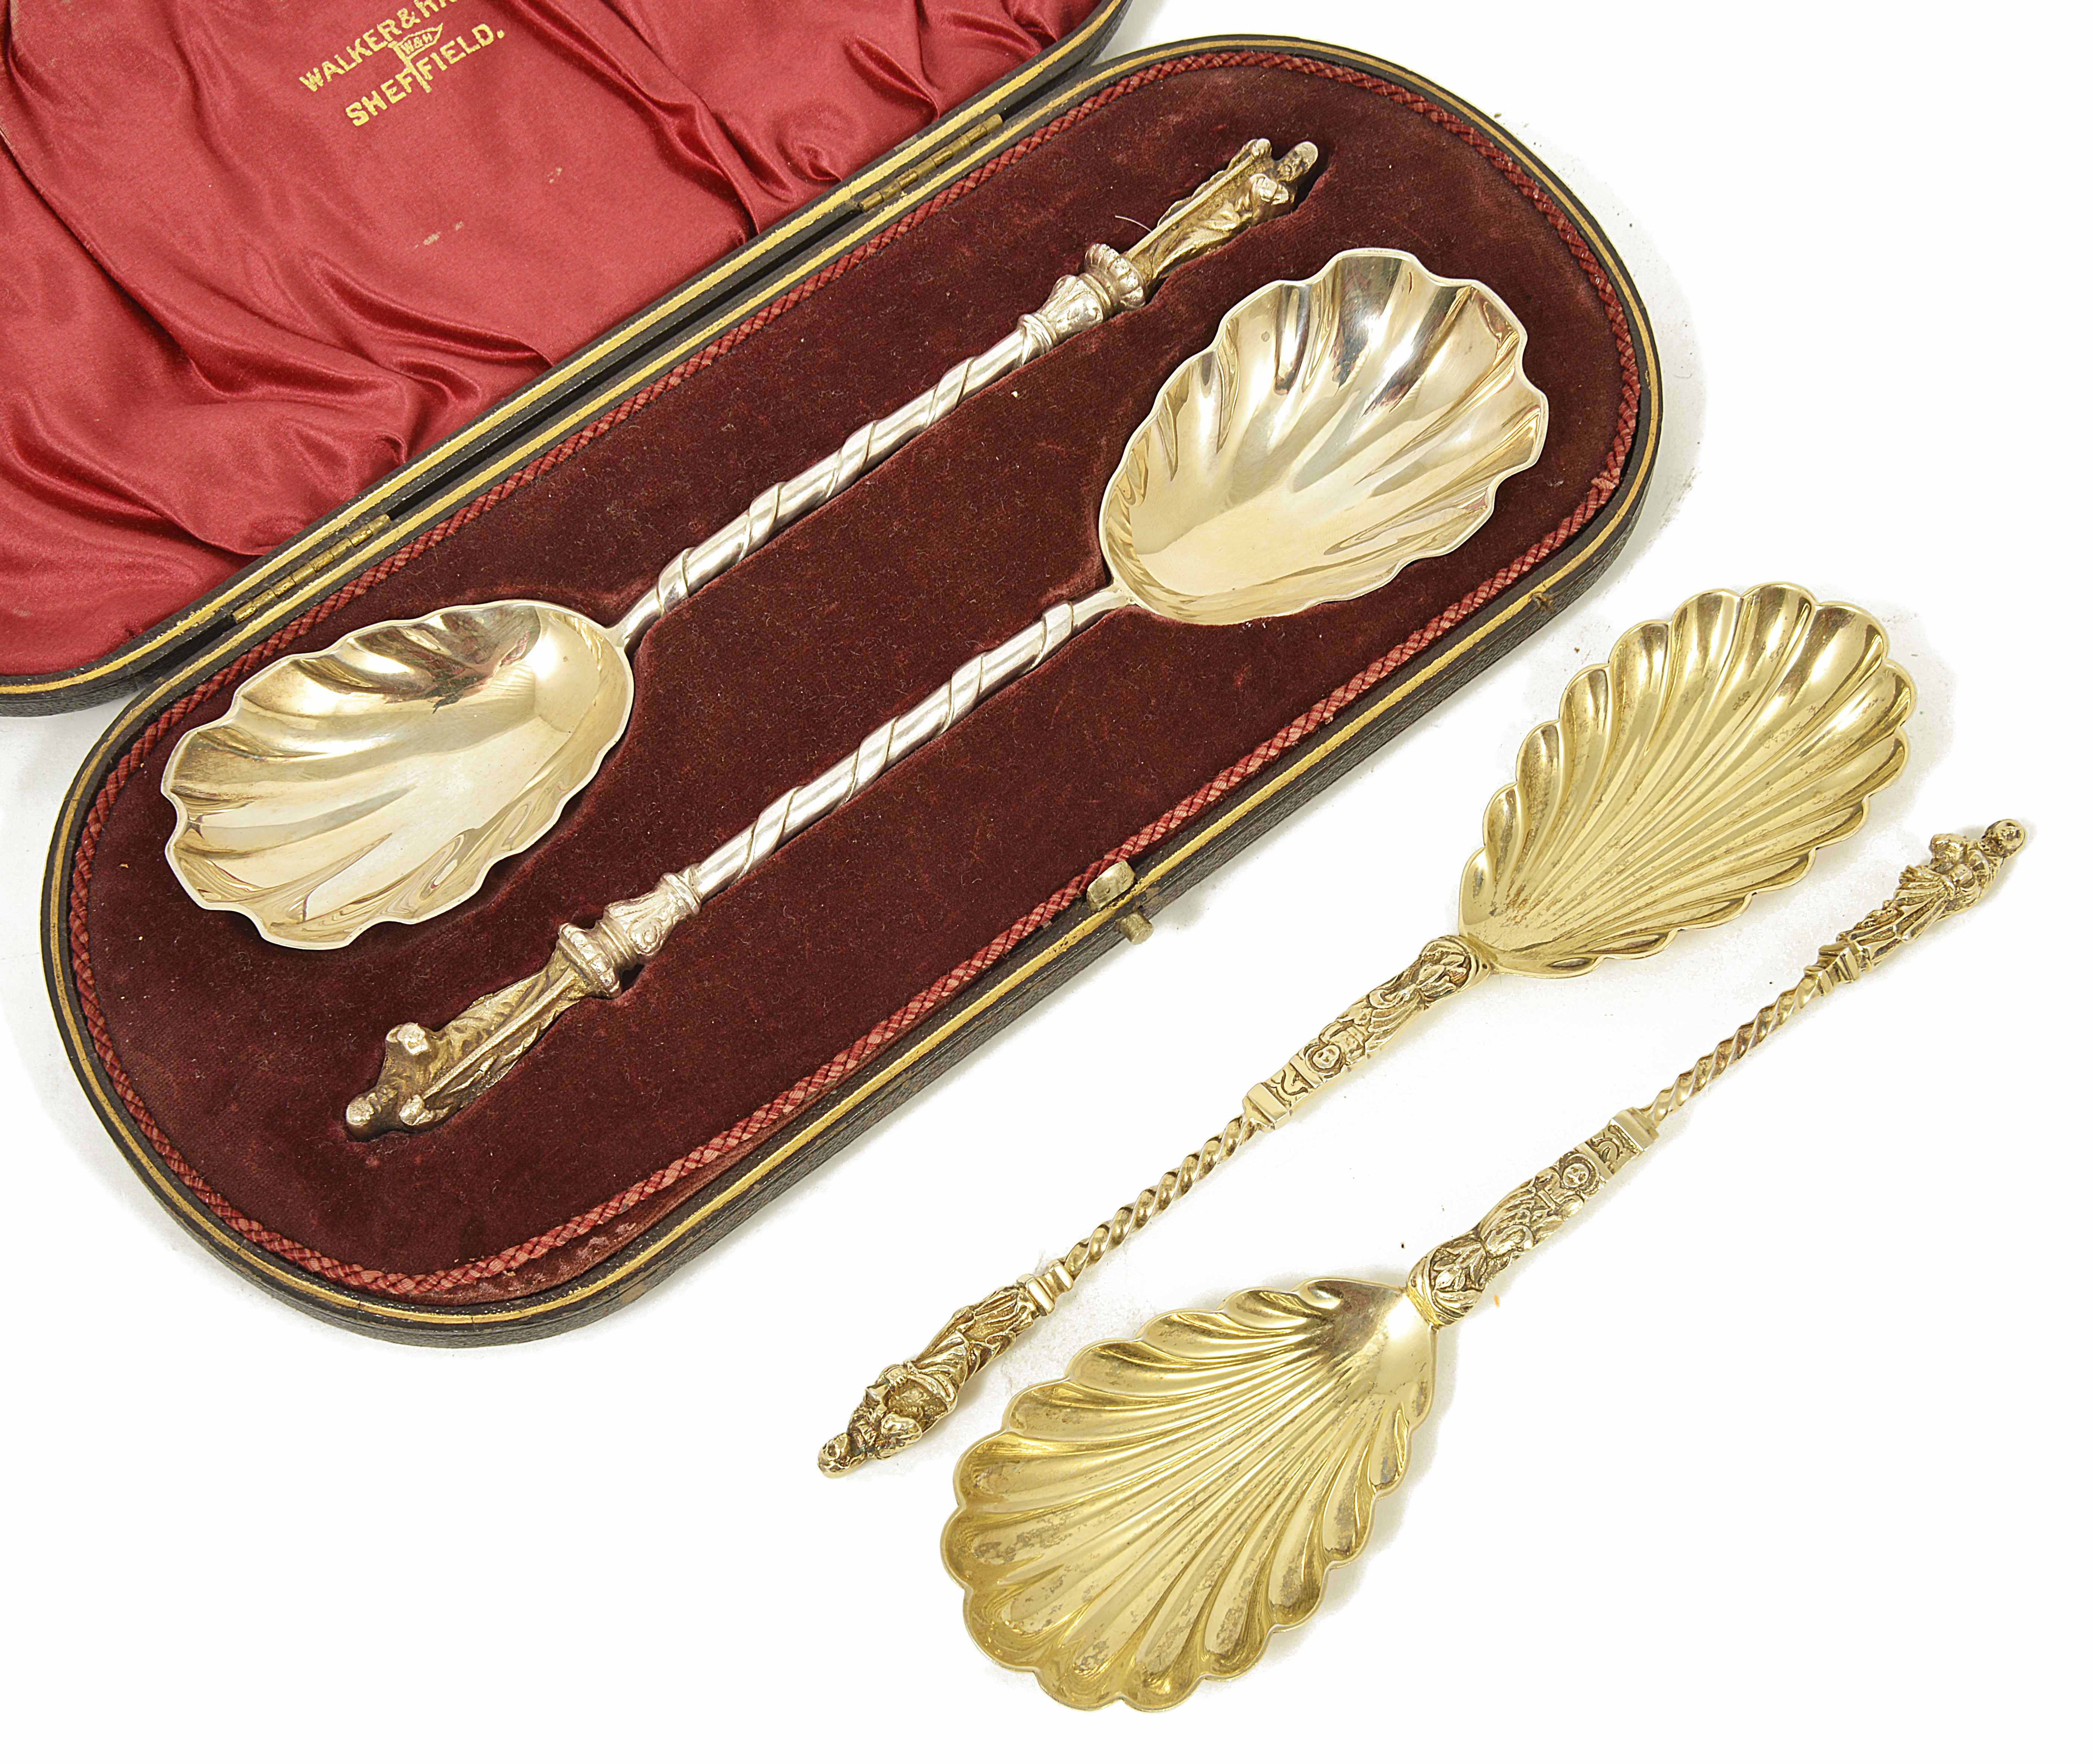 A pair of Edwardian silver gilt Apostle spoons, London 1901 the apostle terminal with barley twist